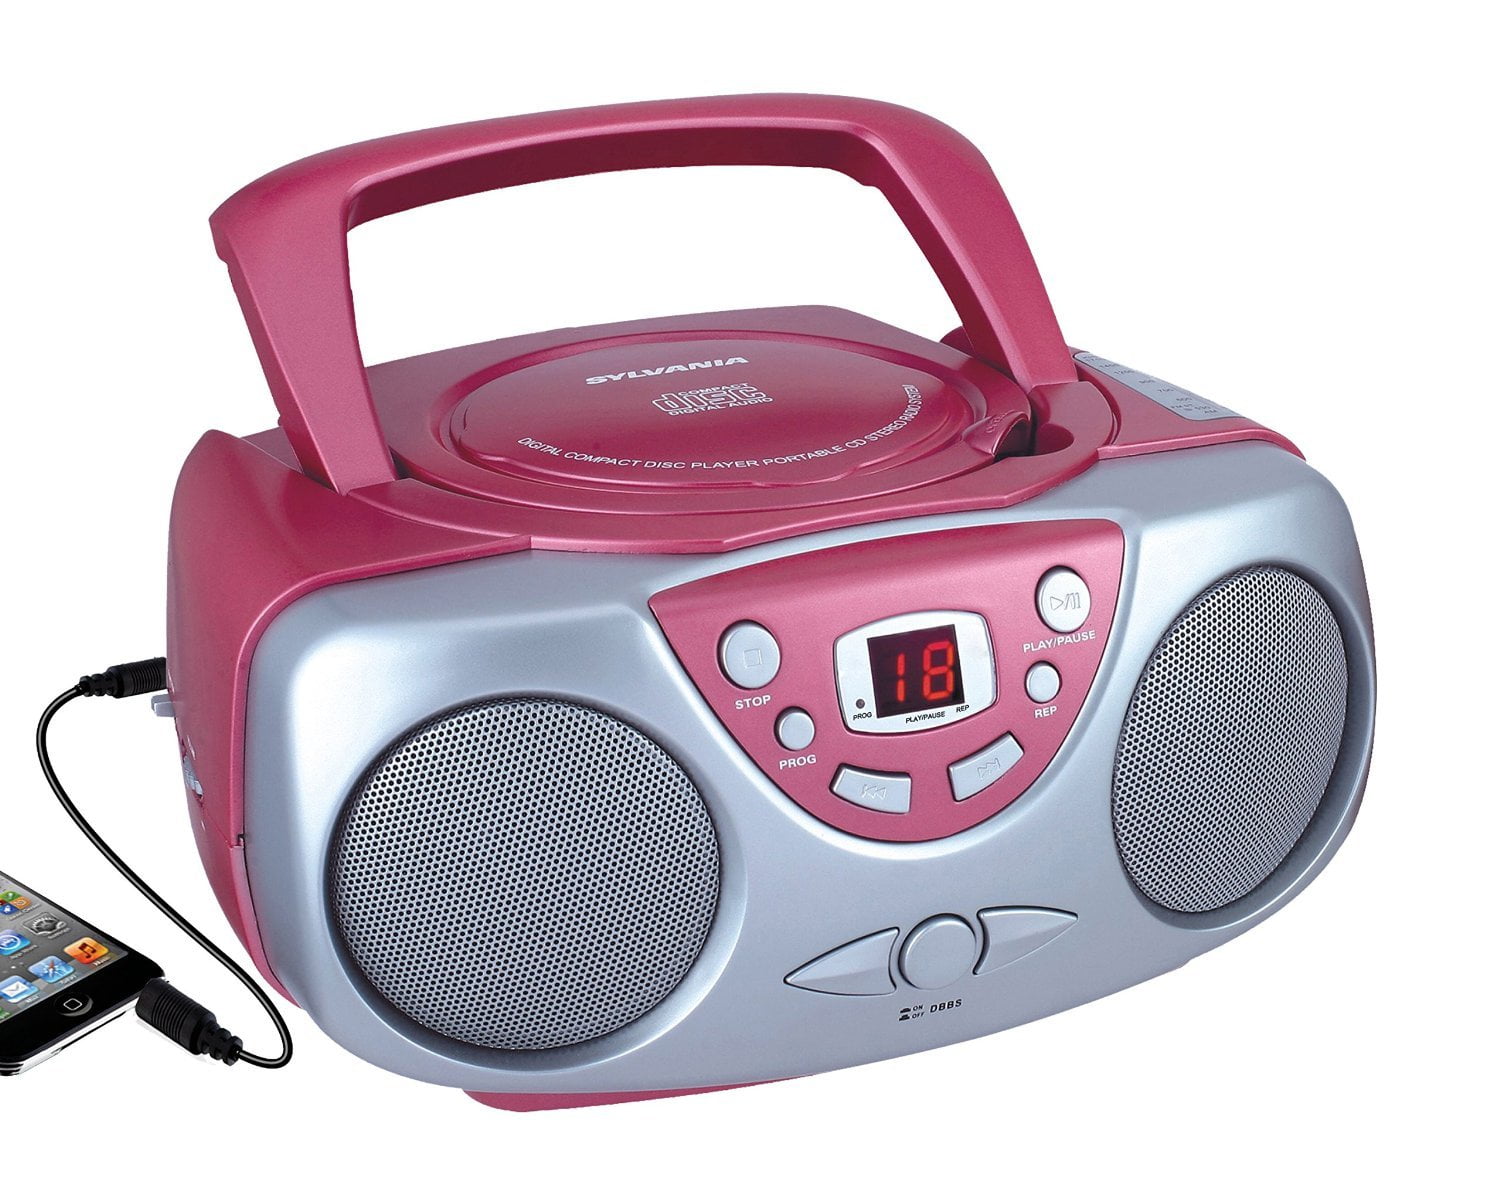 Sylvania Portable Cd Player & AM/FM Radio Mega Bass Reflex Boombox Sound System 